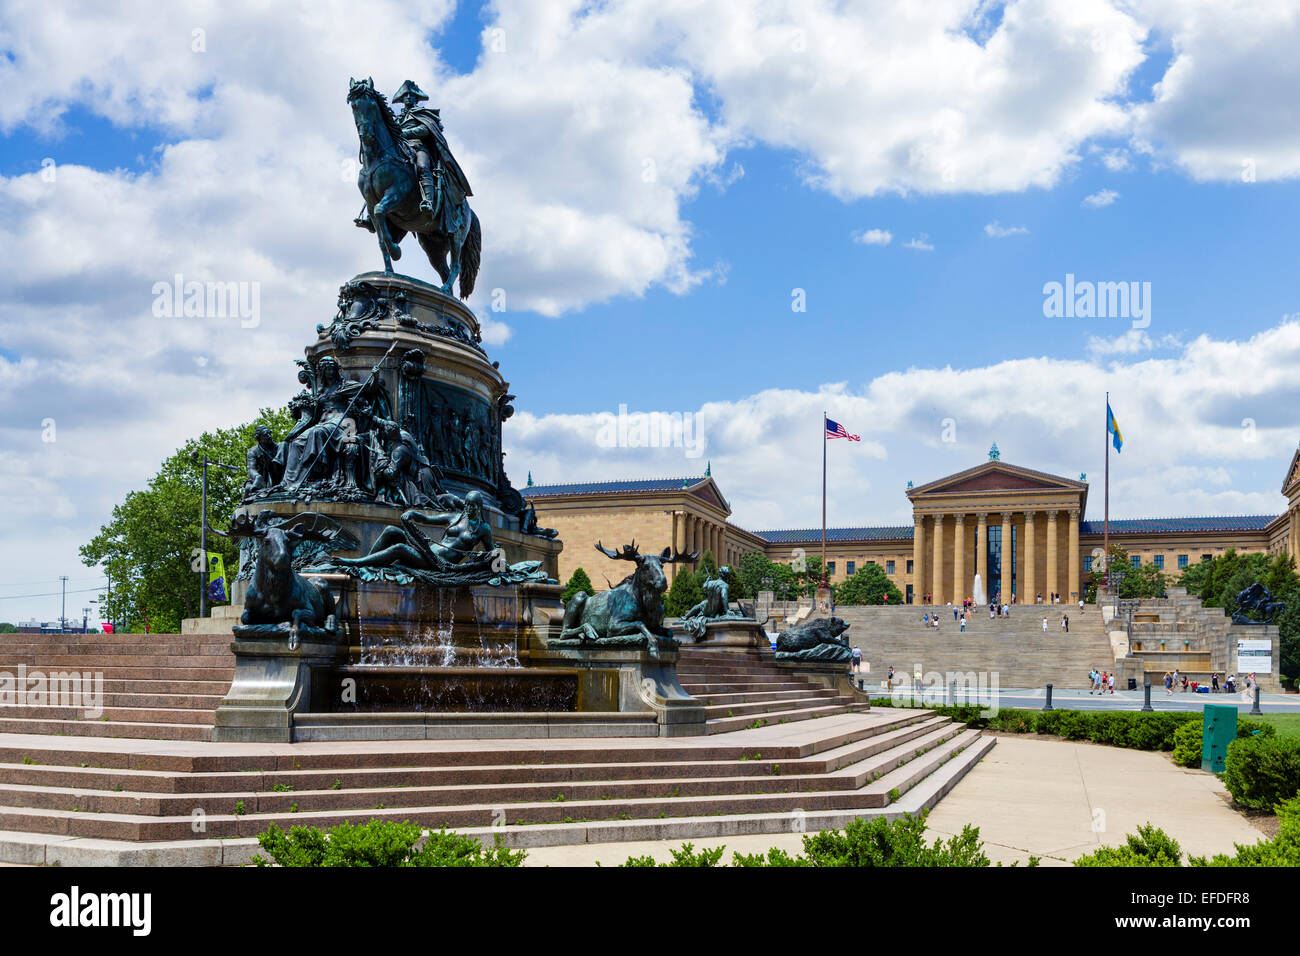 The Monument to George Washington on Eakins Oval in front of Philadelphia Museum of Art, Fairmount Park, Philadelphia, Pennsylvania, USA Stock Photo